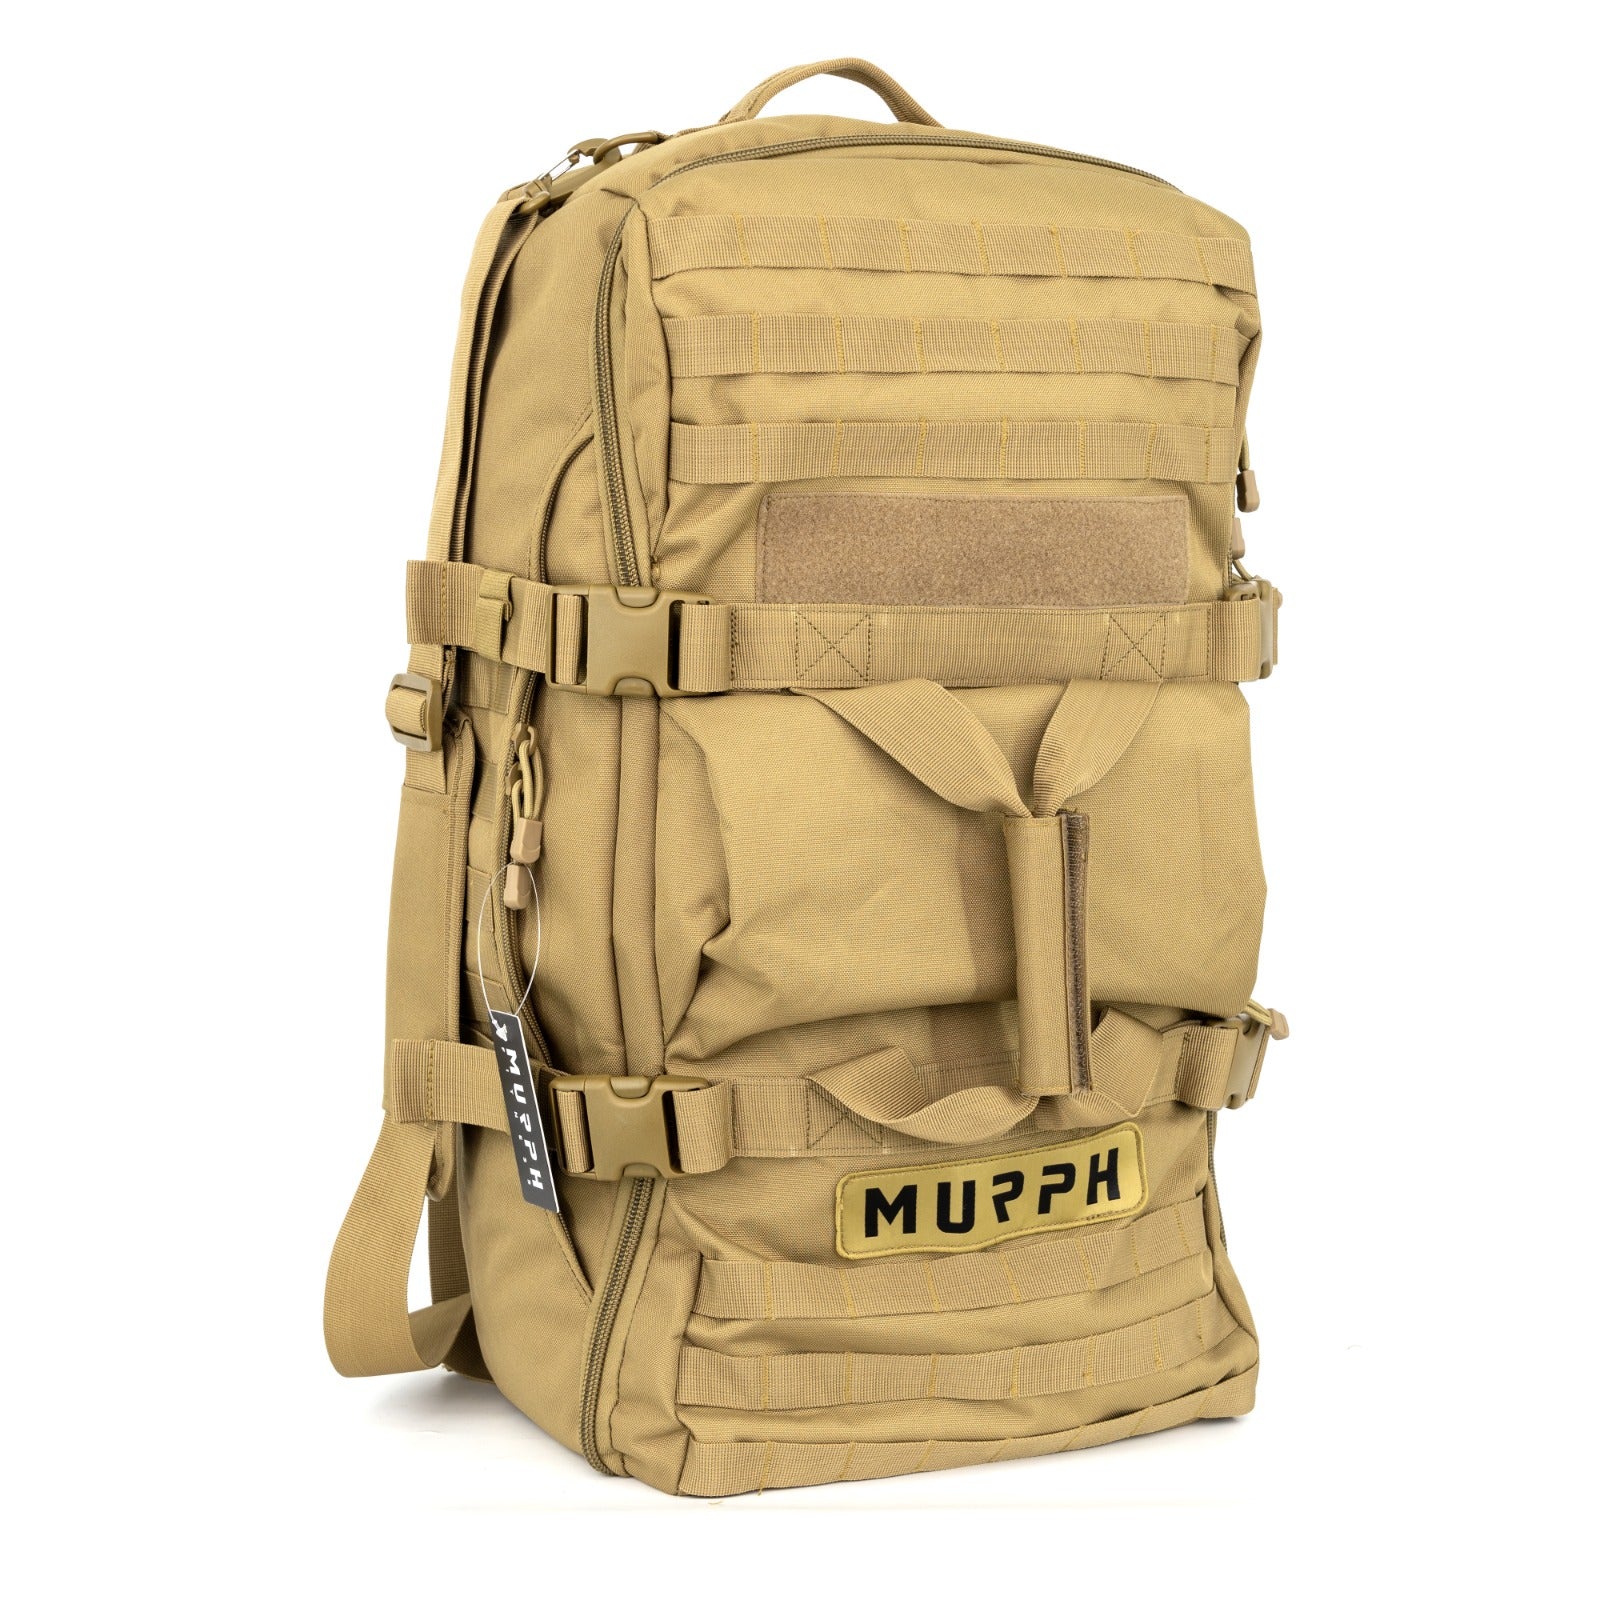 Training bag FlexCore MURPH - Tan